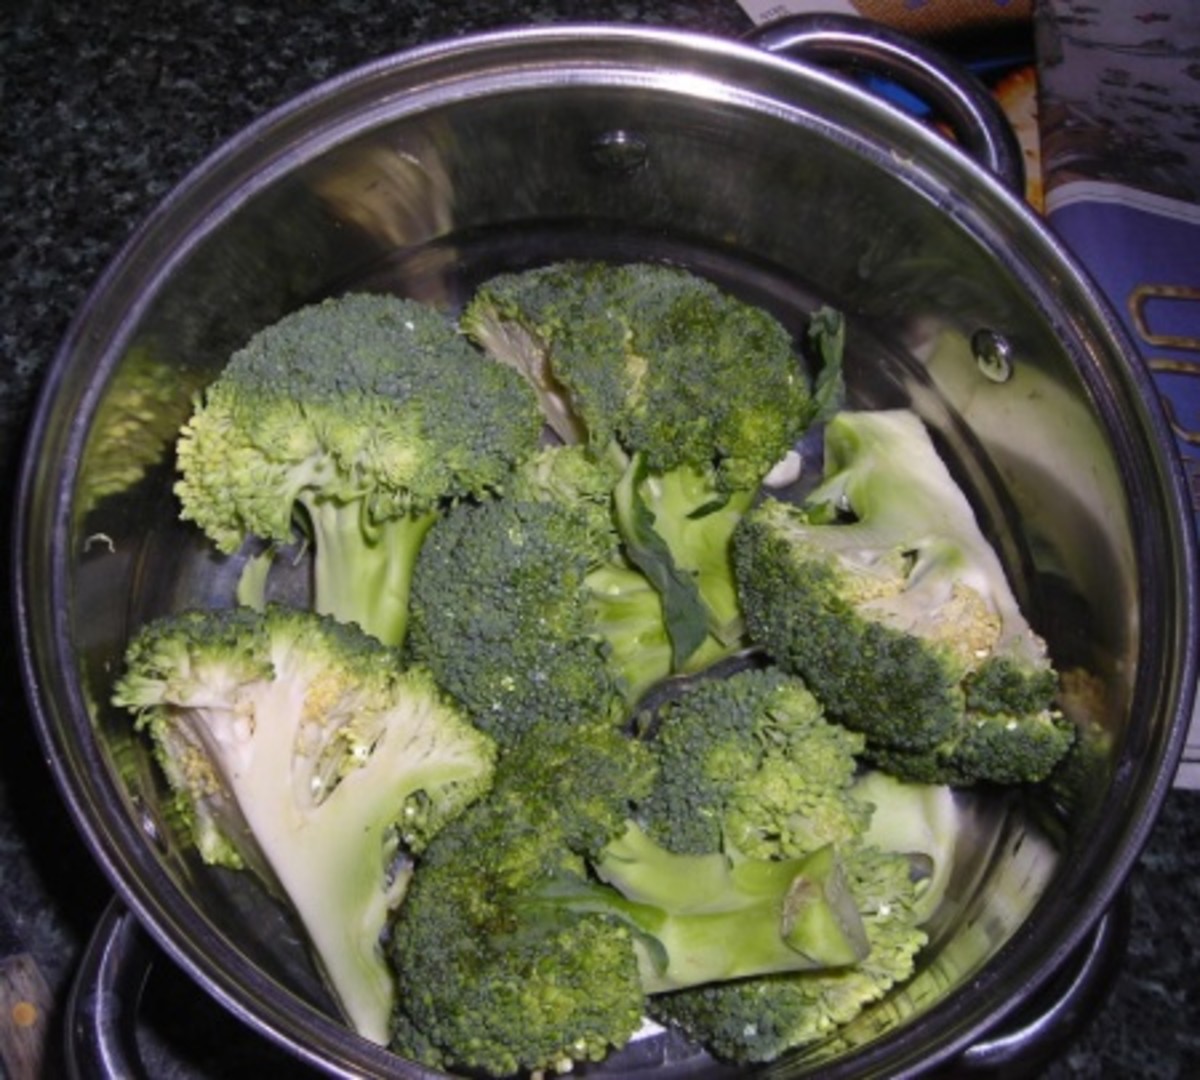 Broccoli in a saucepan